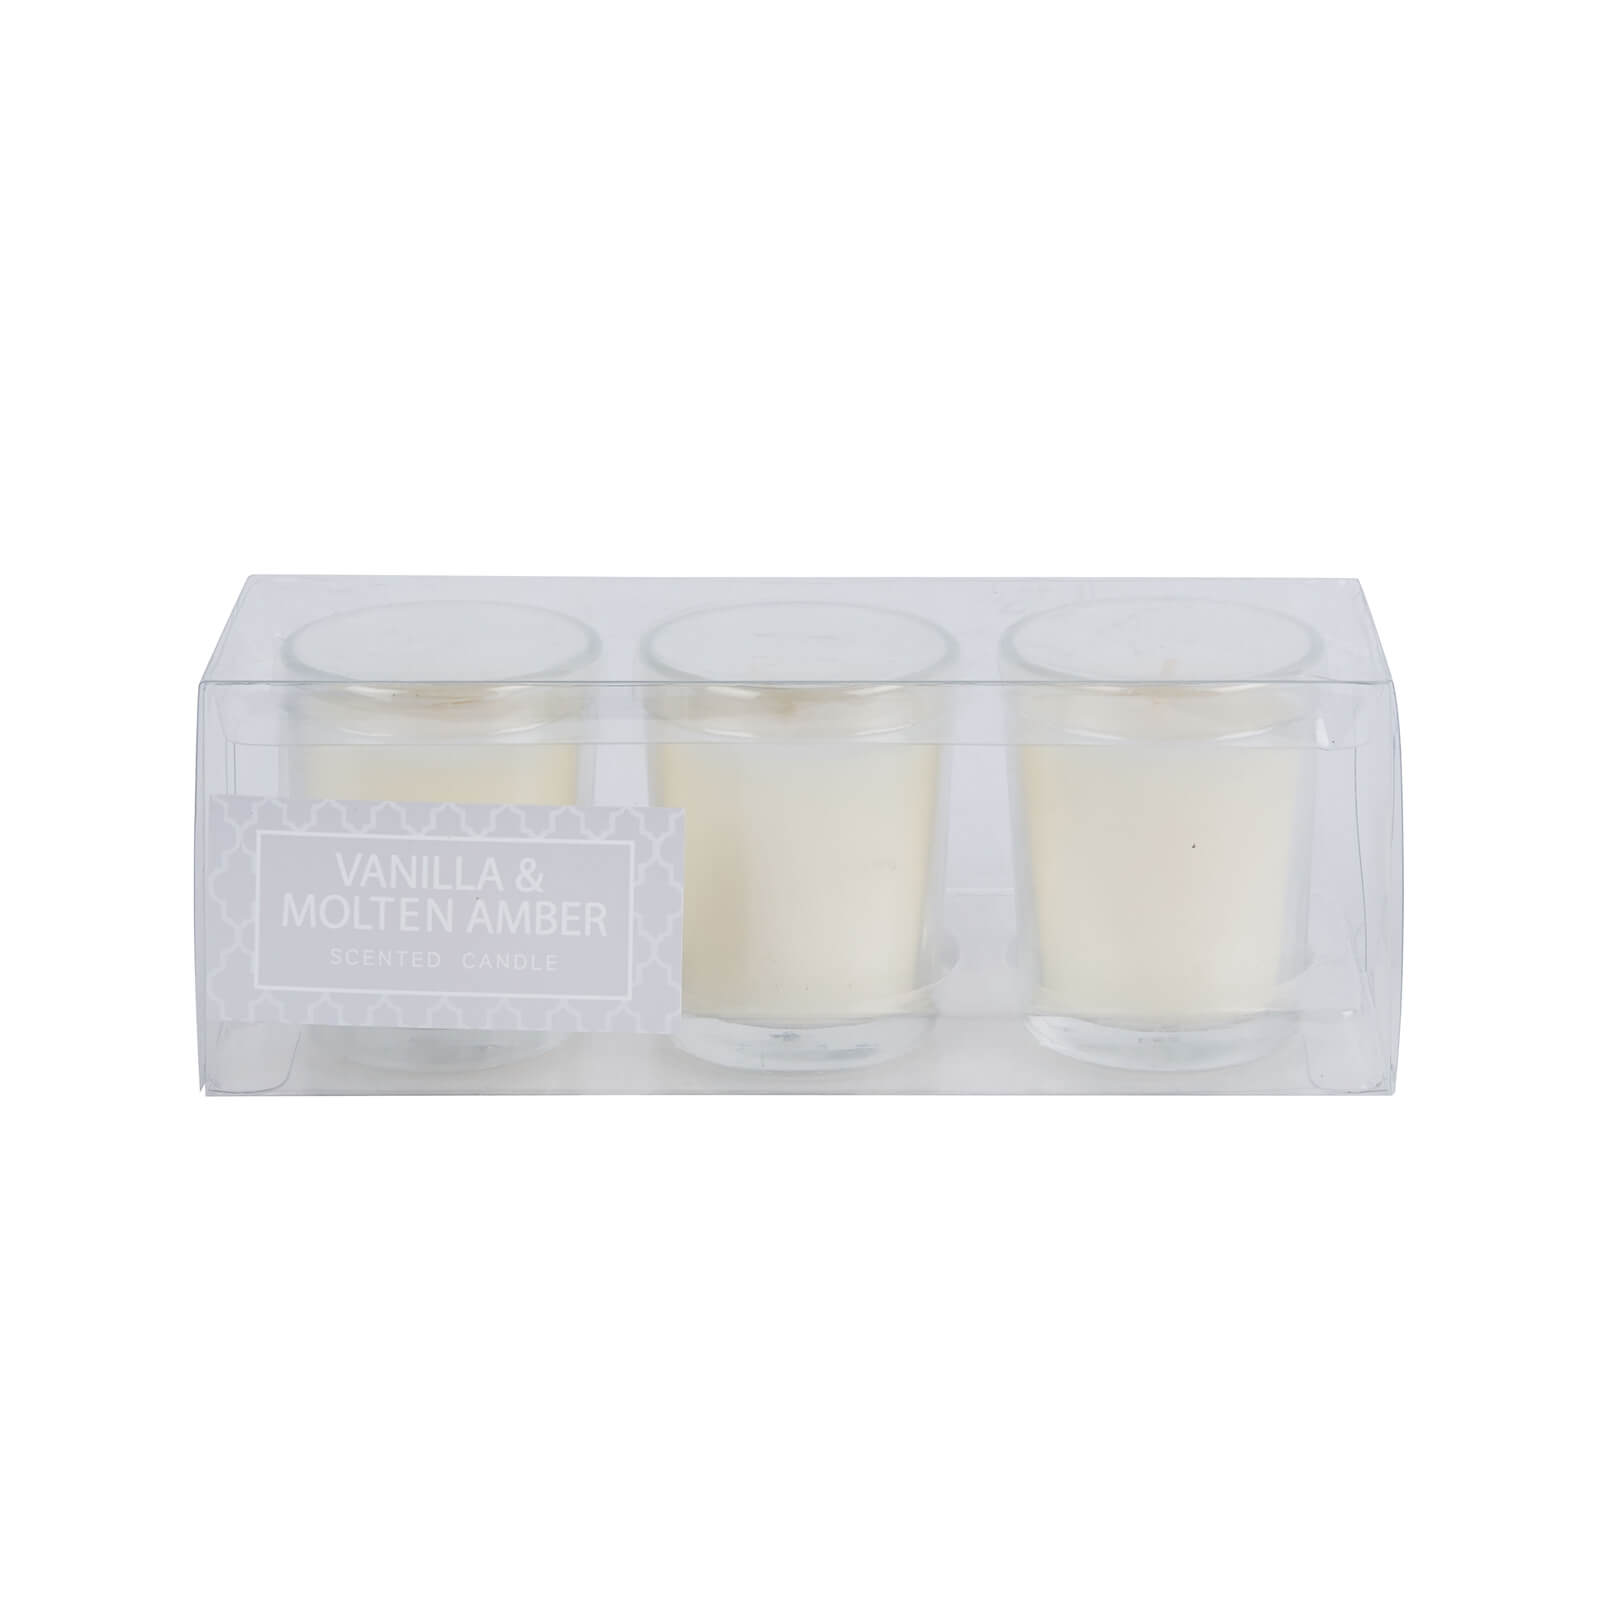 Vanilla & Molten Amber Votive Candle - 3 Pack